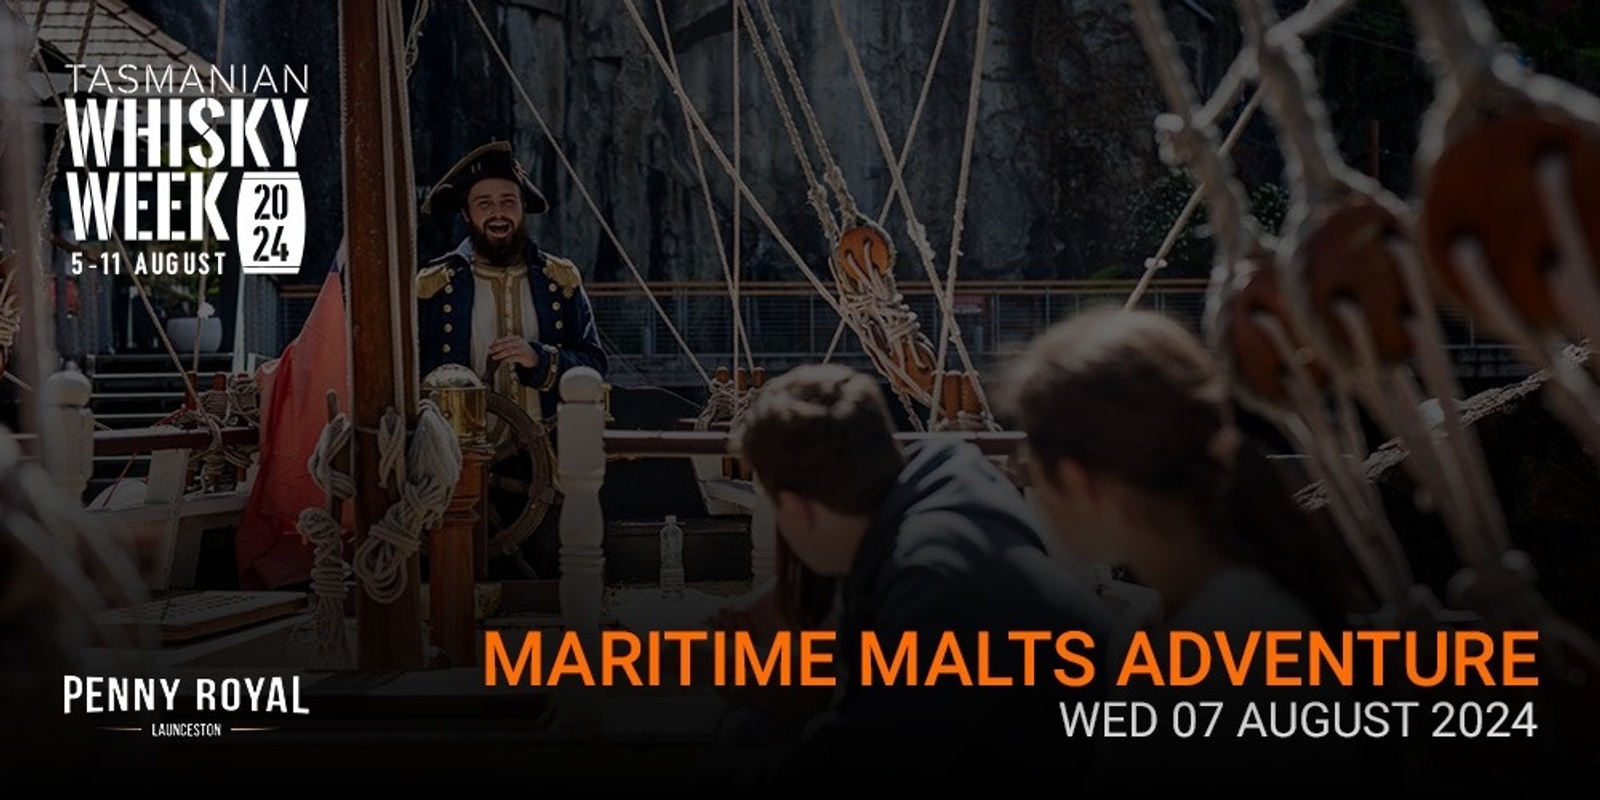 Banner image for Tas Whisky Week - Maritime Malts Adventure